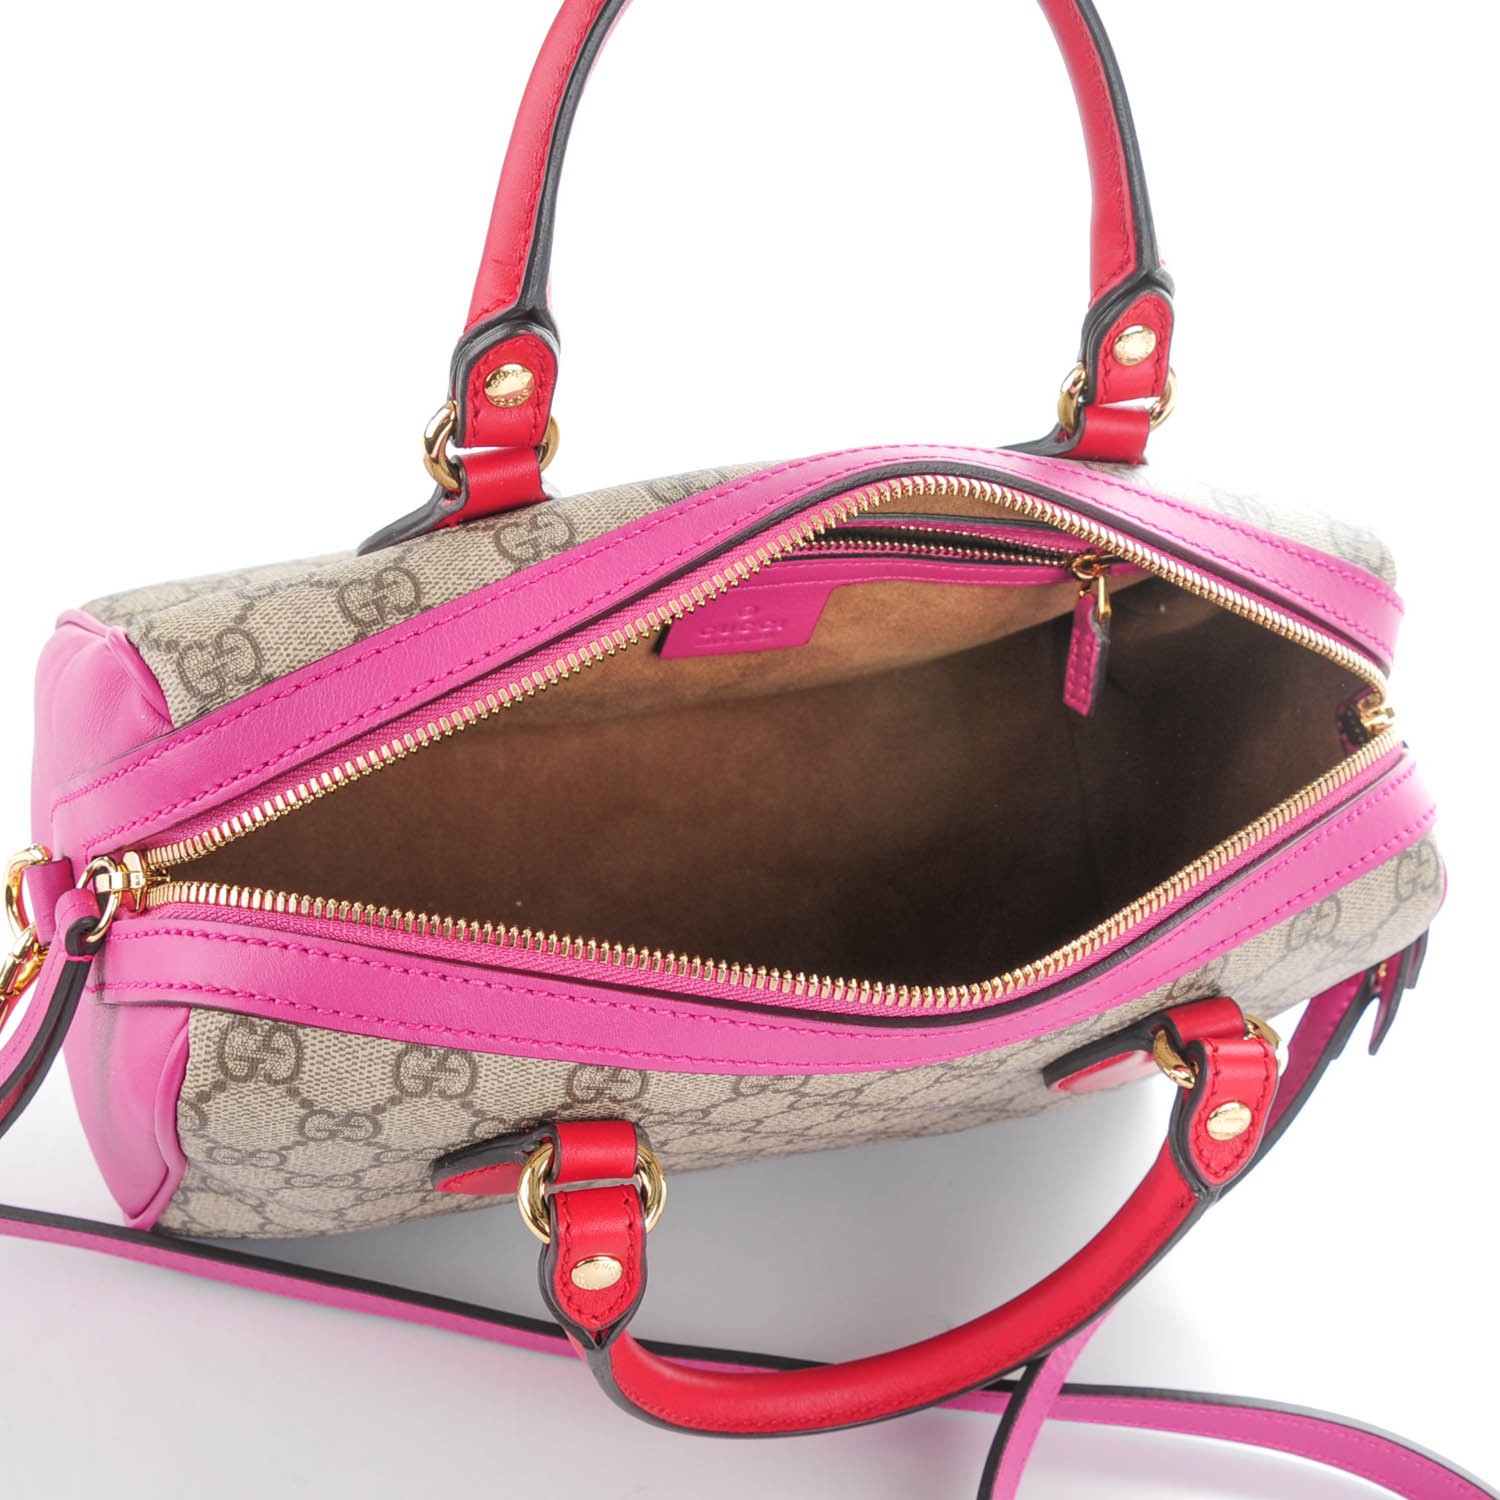 GUCCI GG Supreme Monogram Small Top Handle Bag Hibiscus Pink 147314